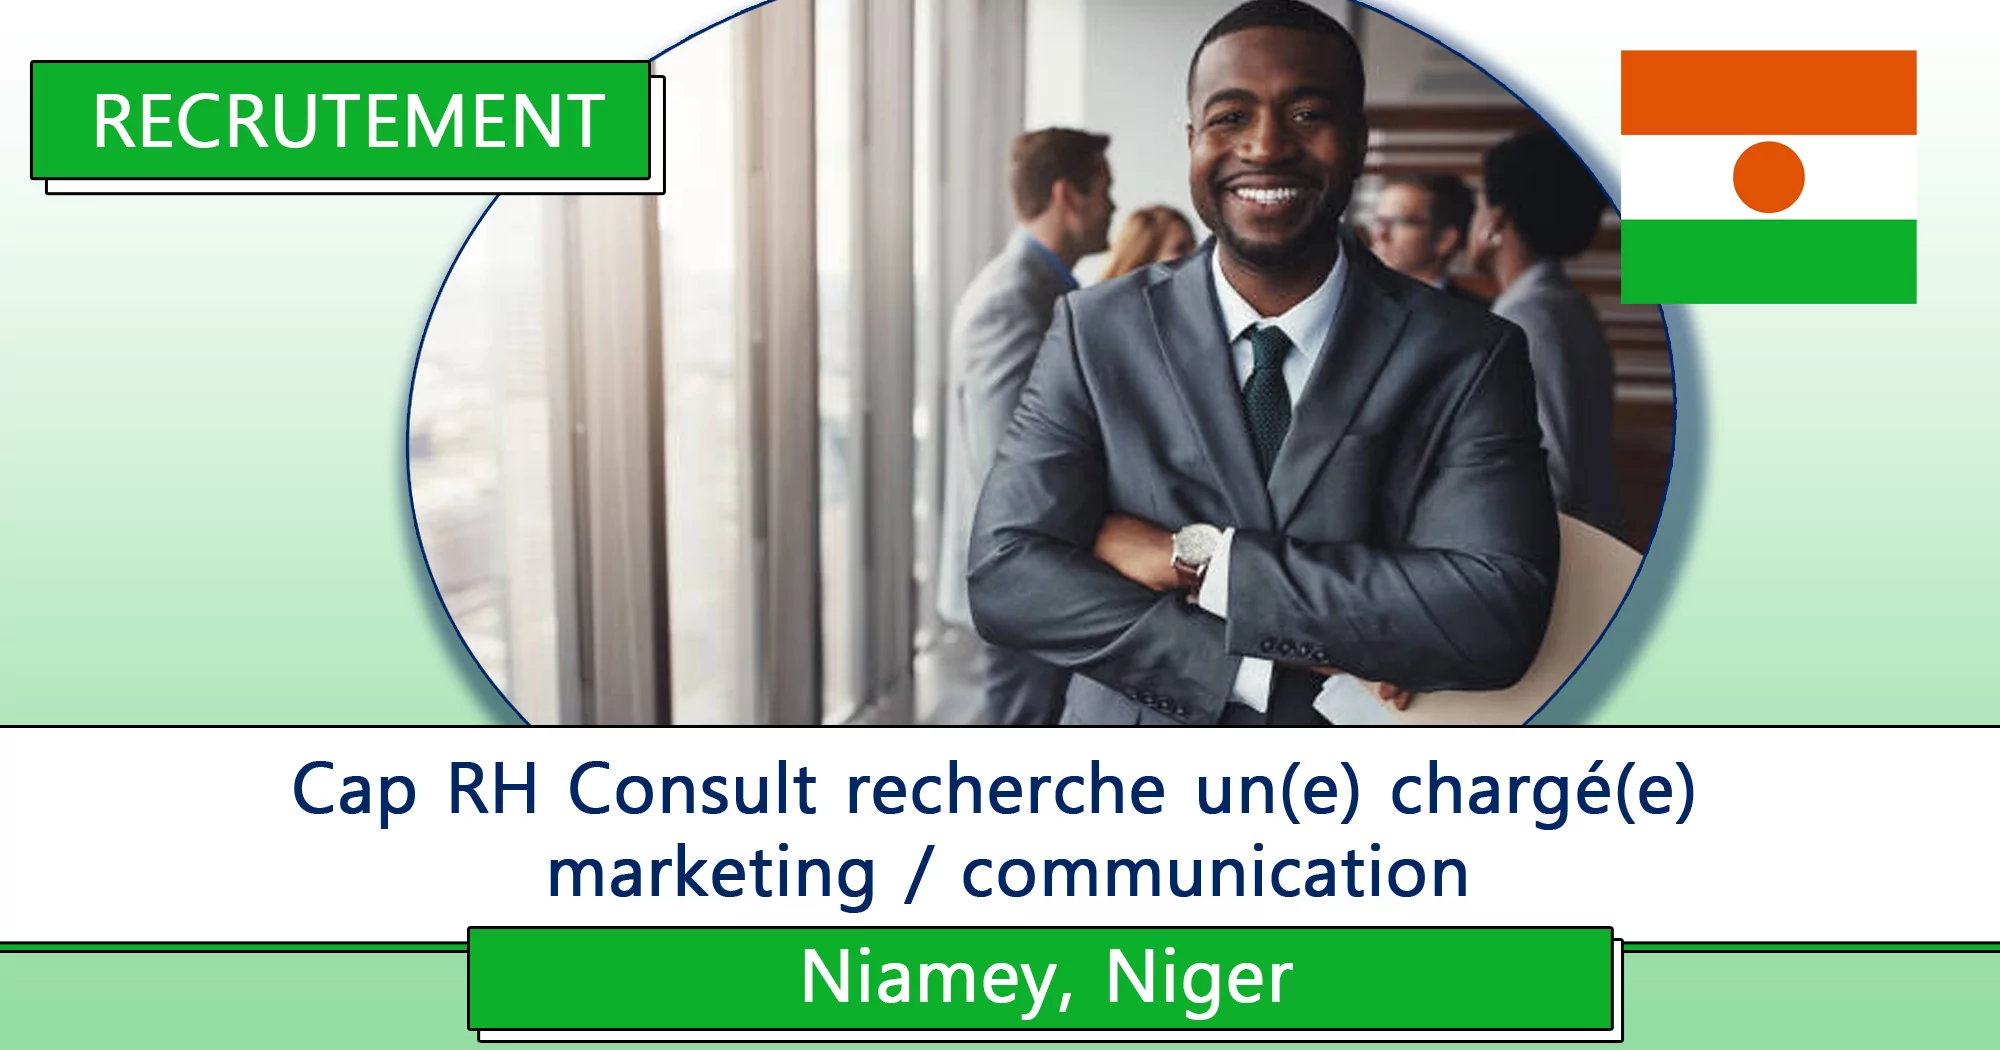 Cap RH Consult recherche un(e) chargé(e) marketing / communication, Niamey, Niger